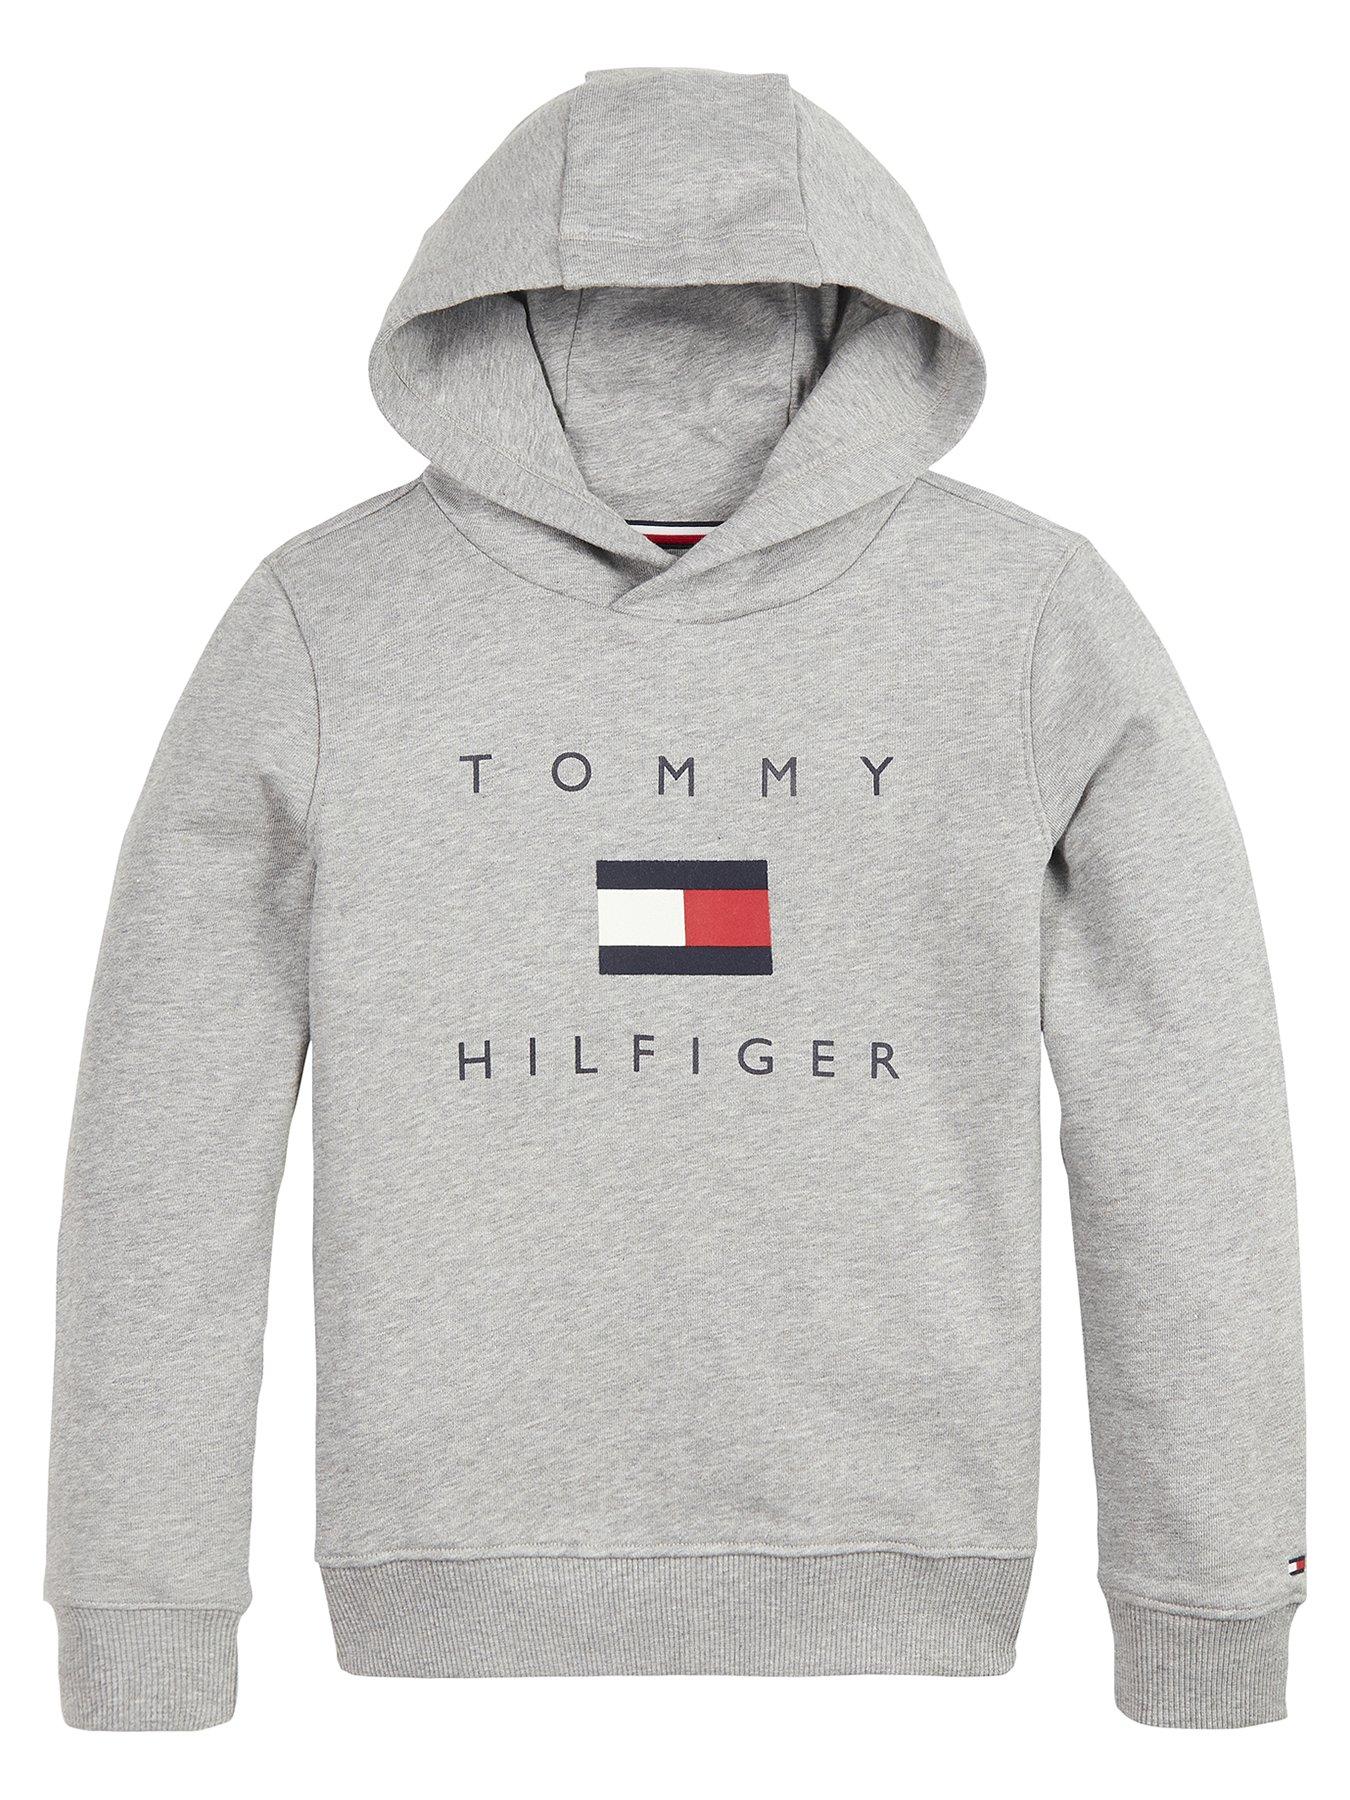 tommy hilfiger boyswear sale